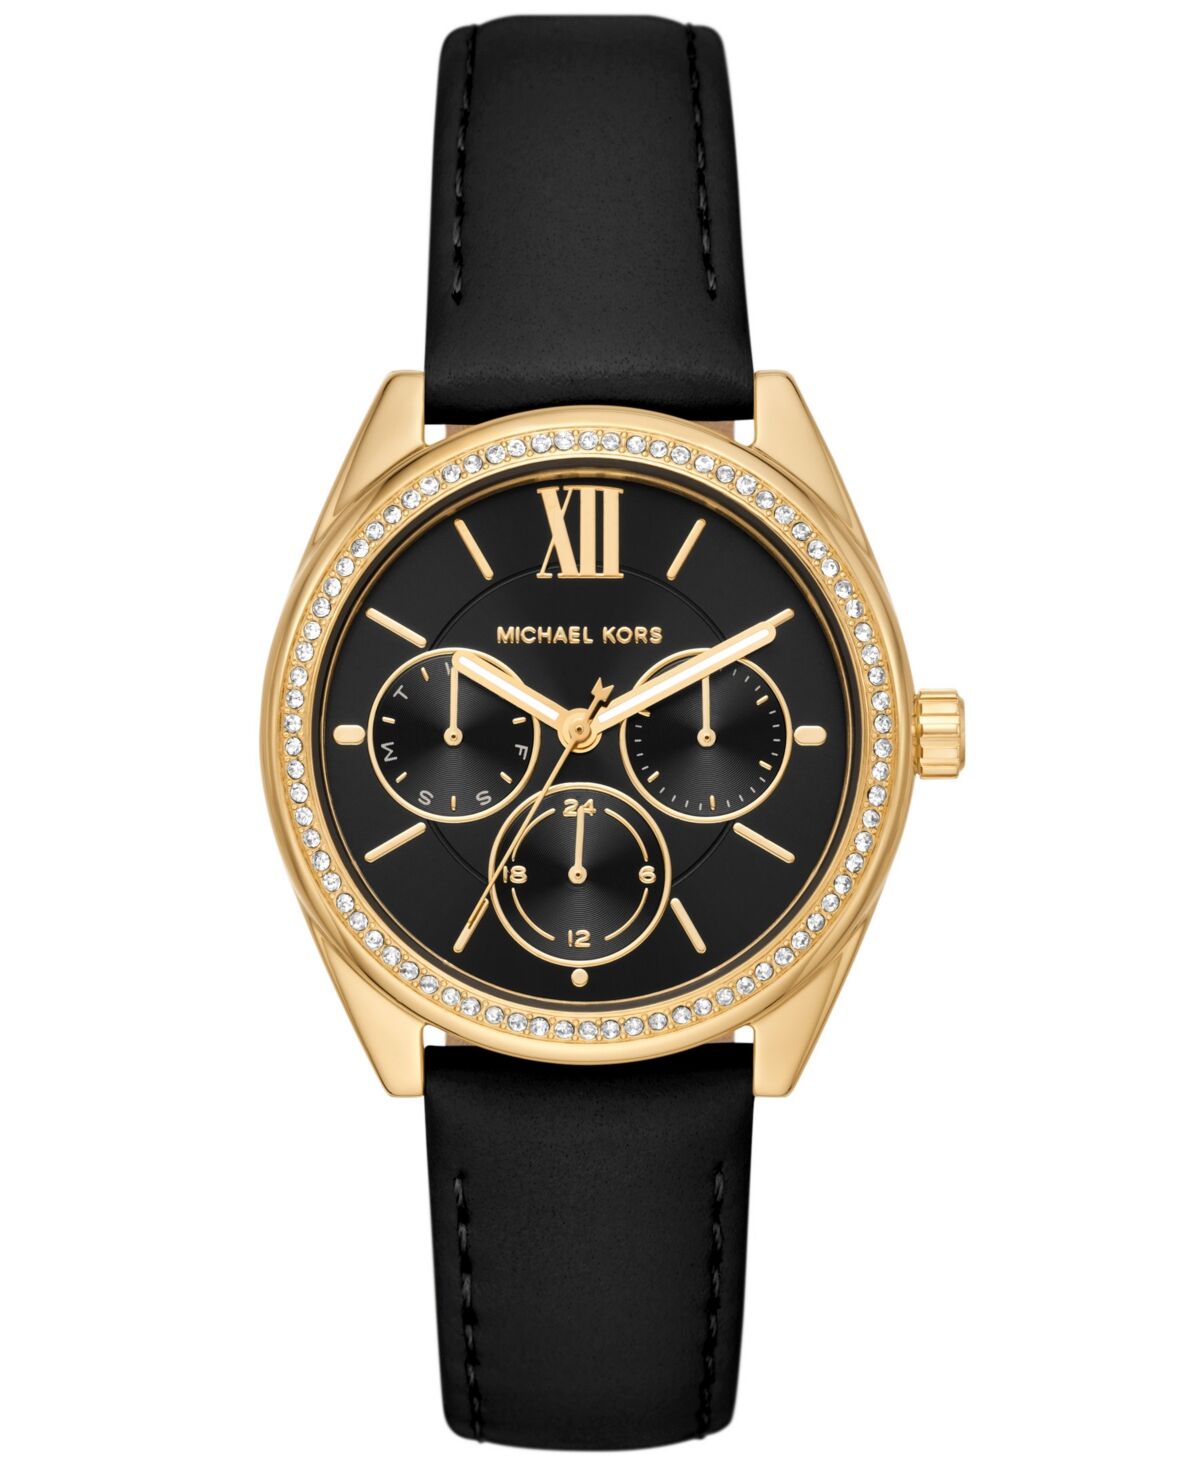 Michael Kors Women's Janelle Multifunction Black Leather Strap Watch 36mm - Black